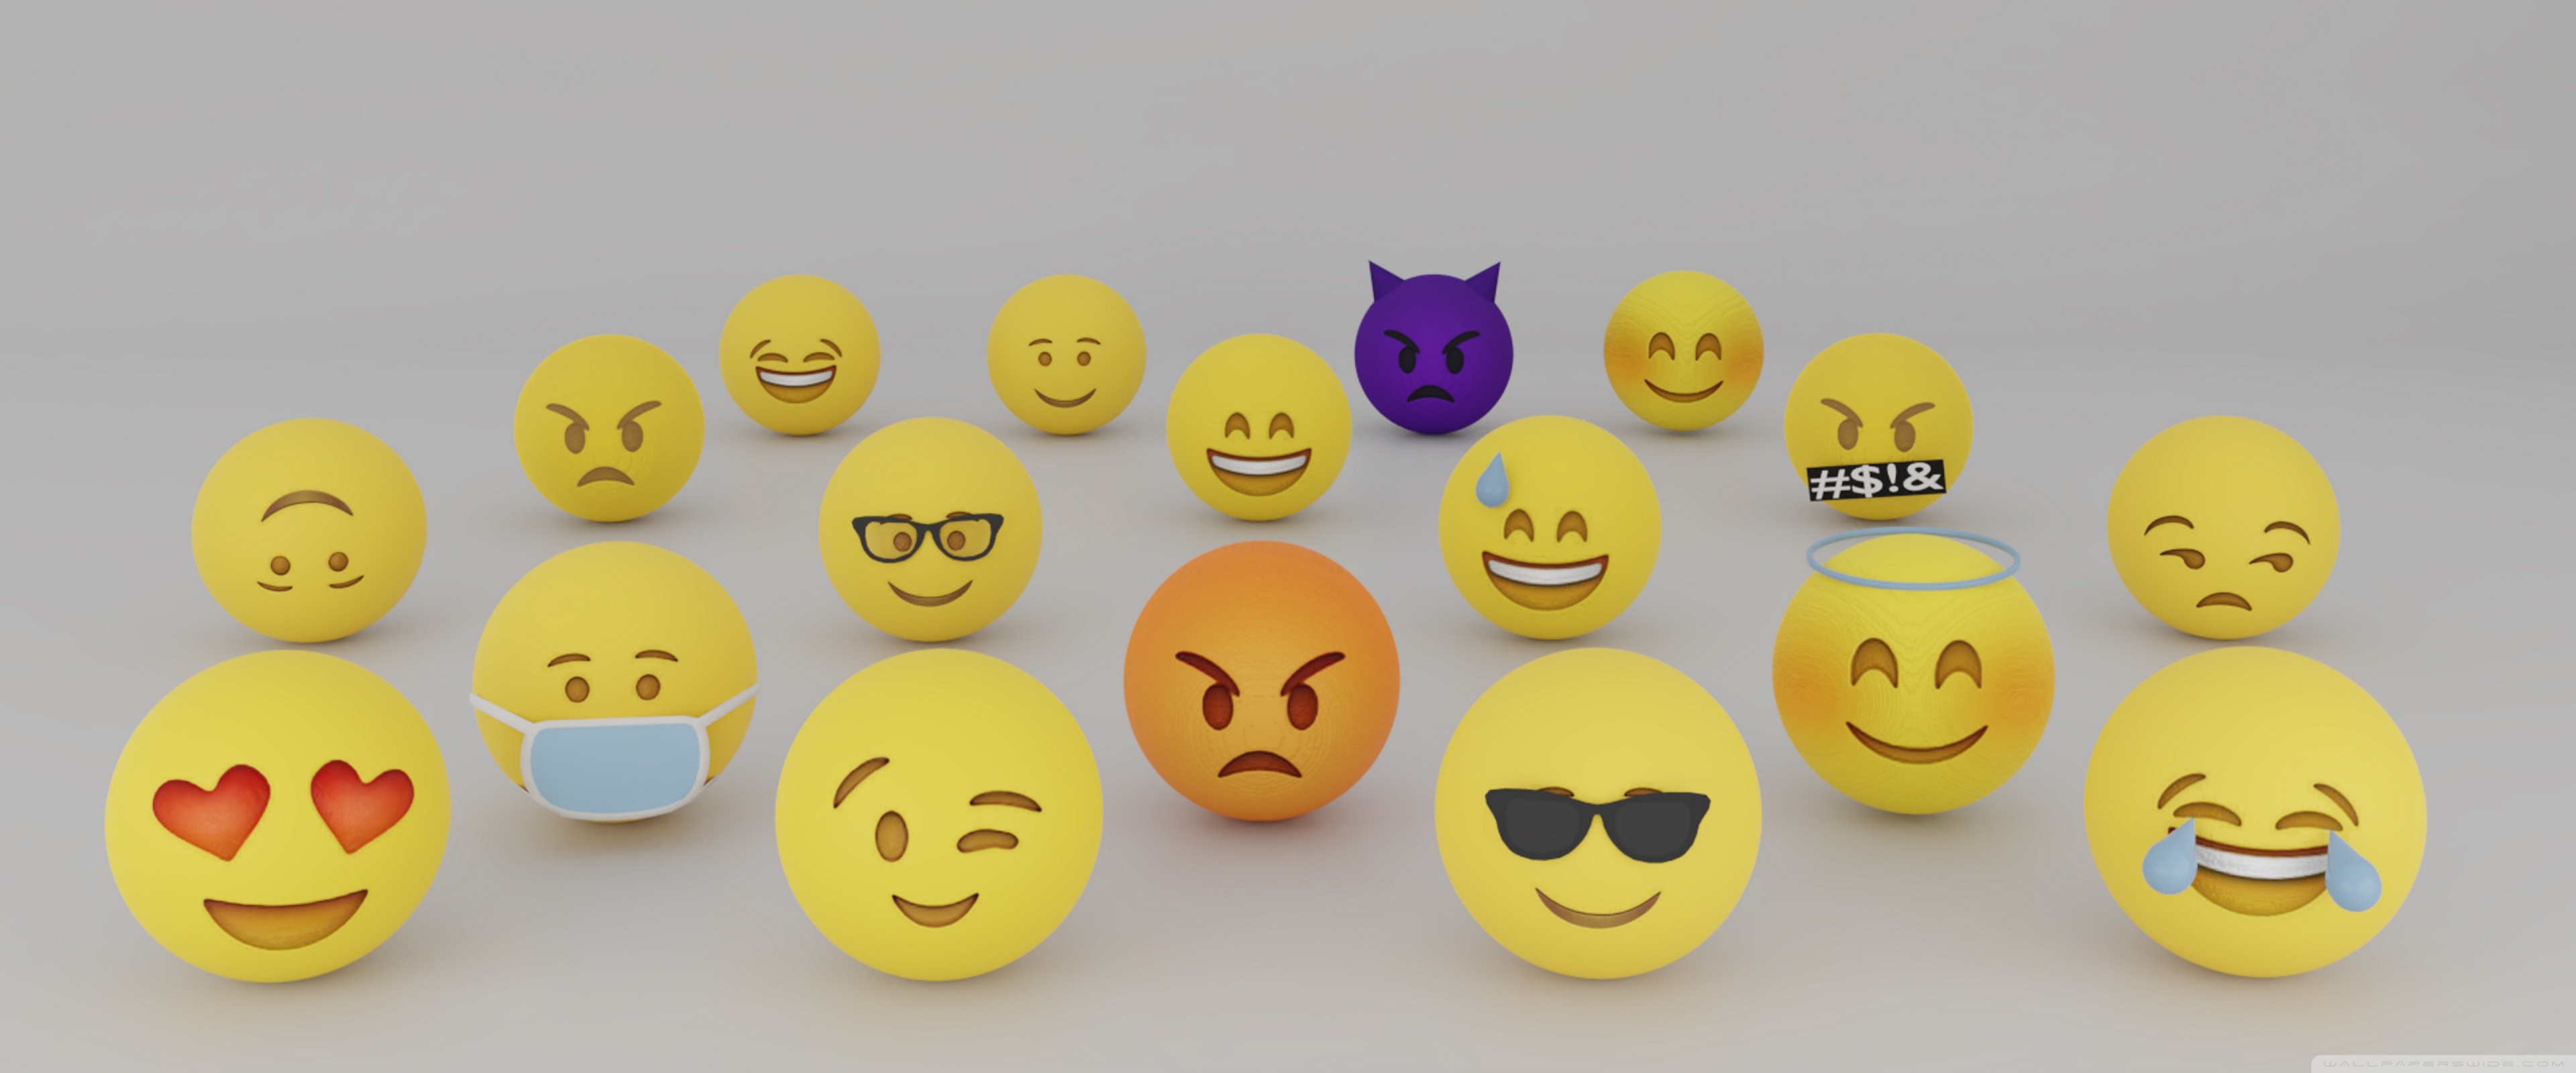 Emojis - HD Wallpaper 